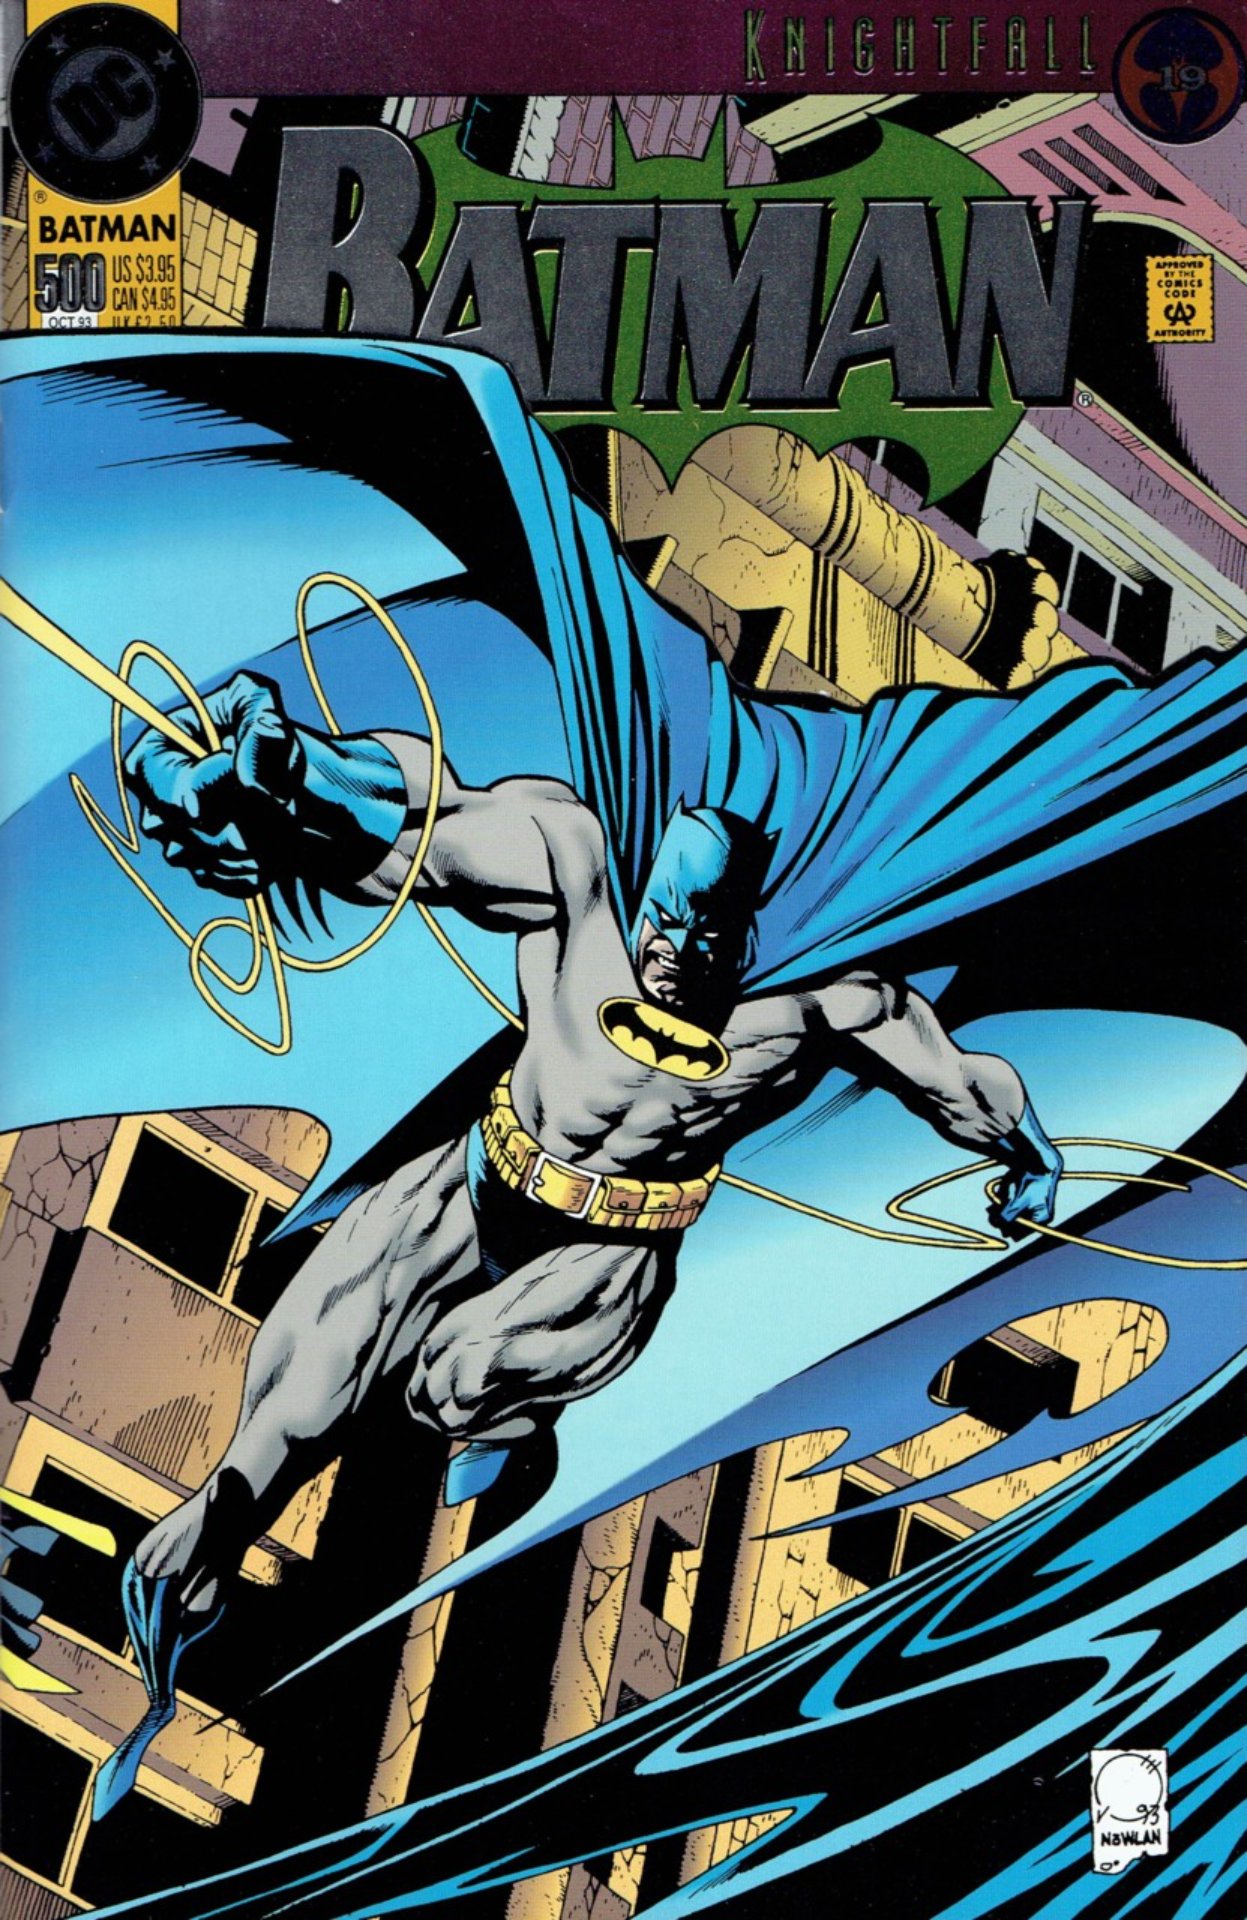 1993's Batman #500 cover by Joe Quesada